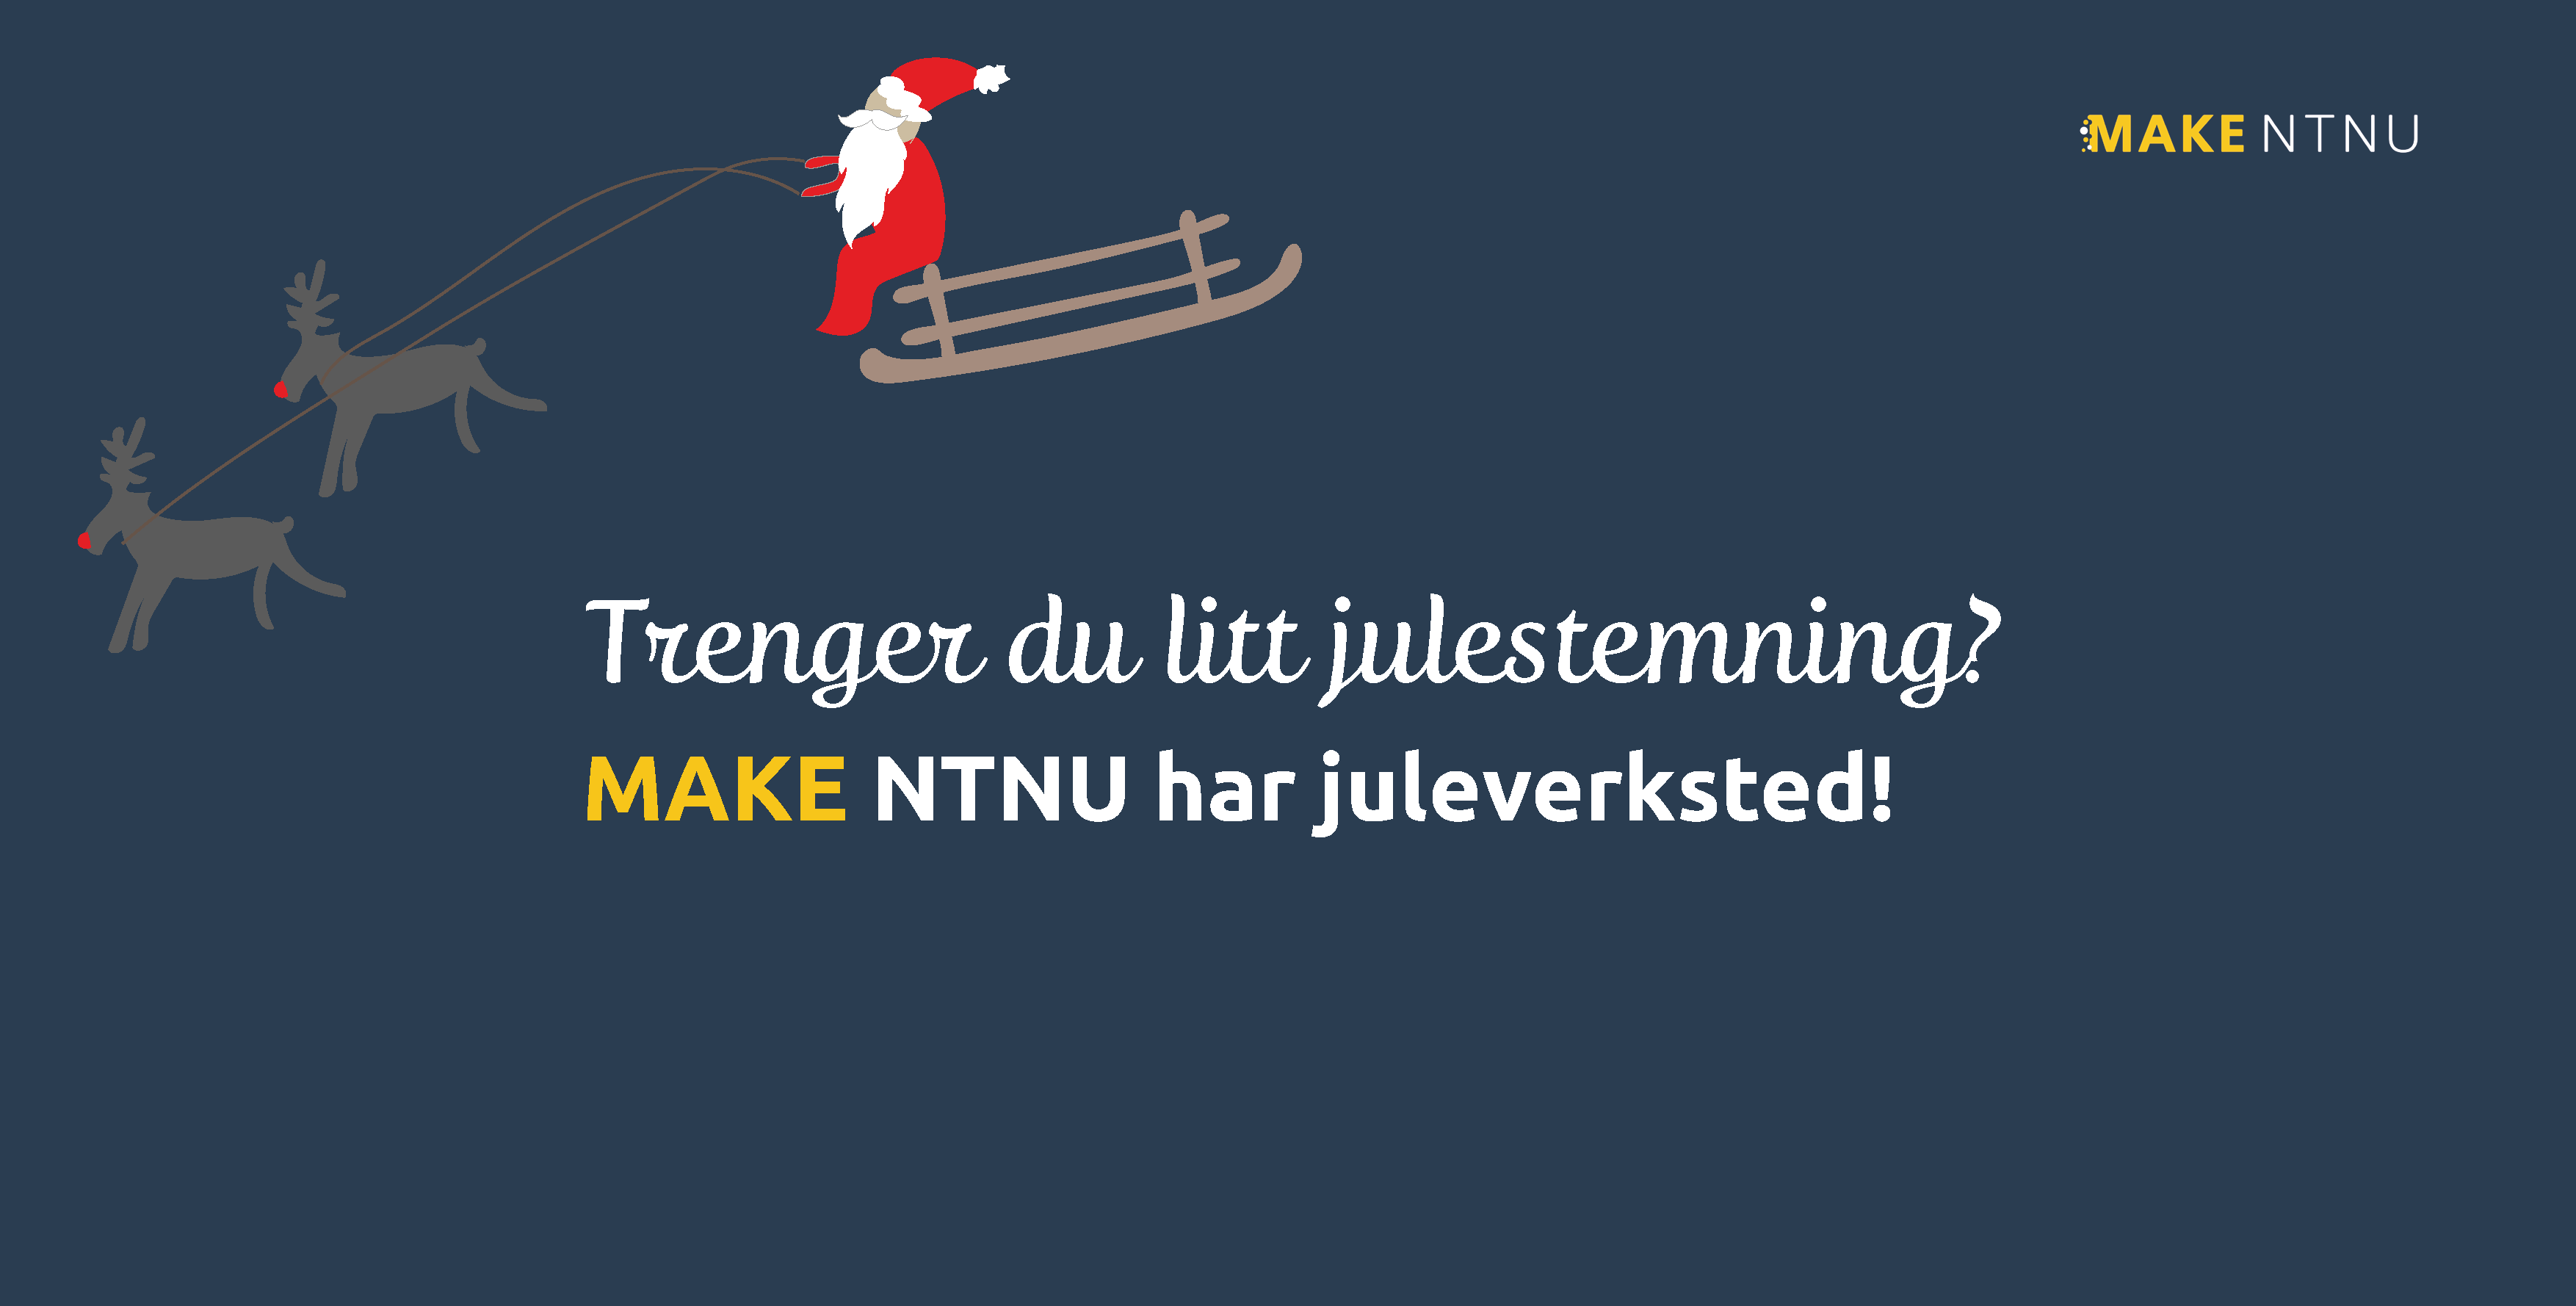 Do you need a little Christmas spirit? MAKE NTNU is hosting a Christmas workshop!